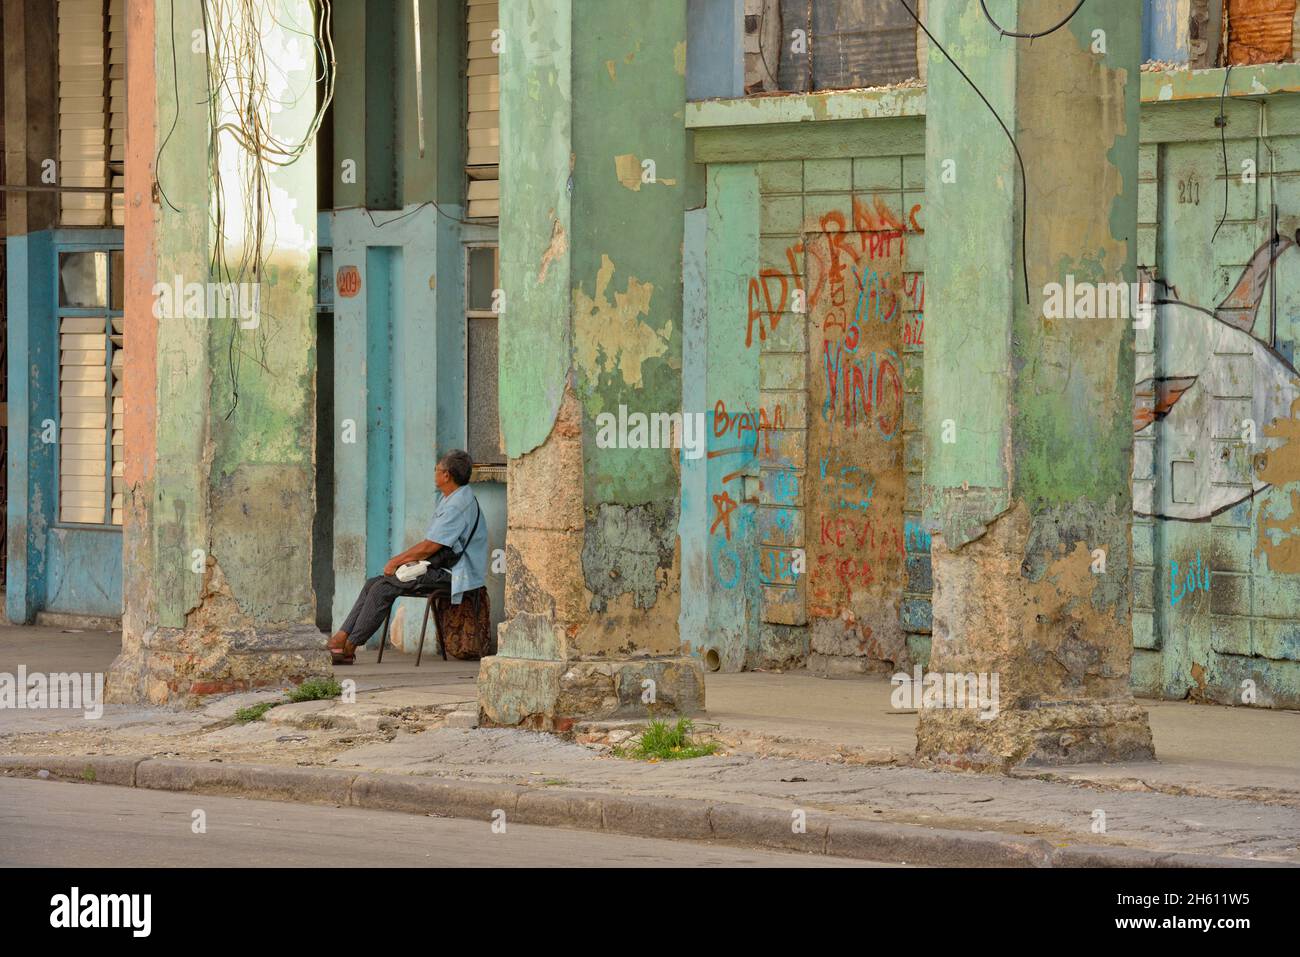 Straßenszene im Zentrum von Havanna. Zerbröckelnde Kolonialarchitektur mit sitzenden Männern, La Habana (Havanna), Habana, Kuba Stockfoto